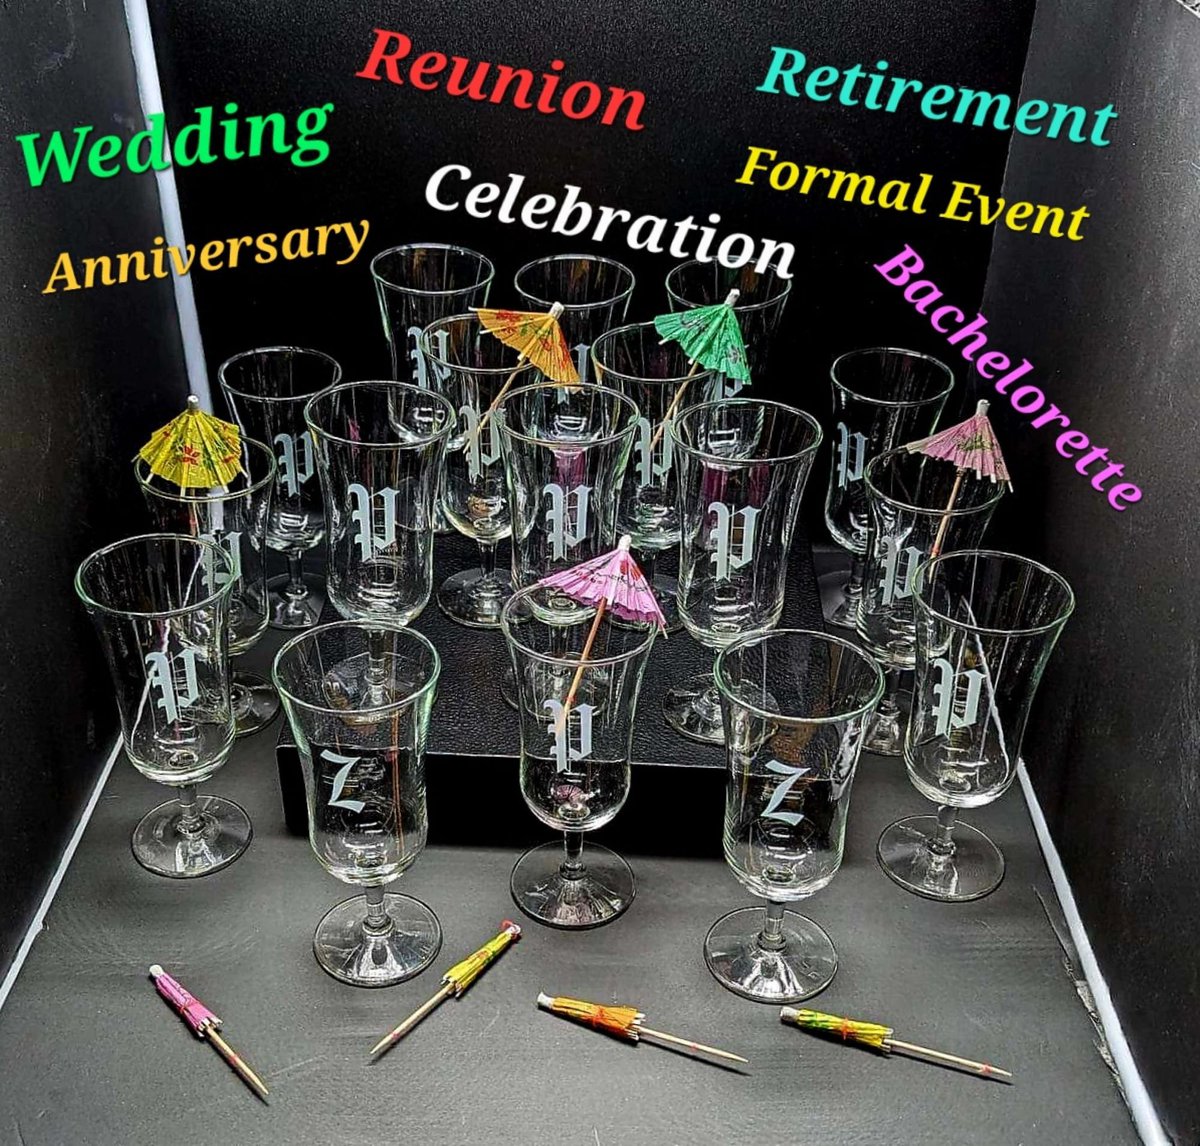 DKVintageandbeyond.etsy.com : Vintage Stemmed 6oz All Occasion Cocktail Glasses Monogramed 15 (P) 2 (Z) Wedding Anniversary Reunion Birthday Set of 17 etsy.me/3DnE0J7 #clear #wedding #white #glass #partyglasses #monogramglassset #letter